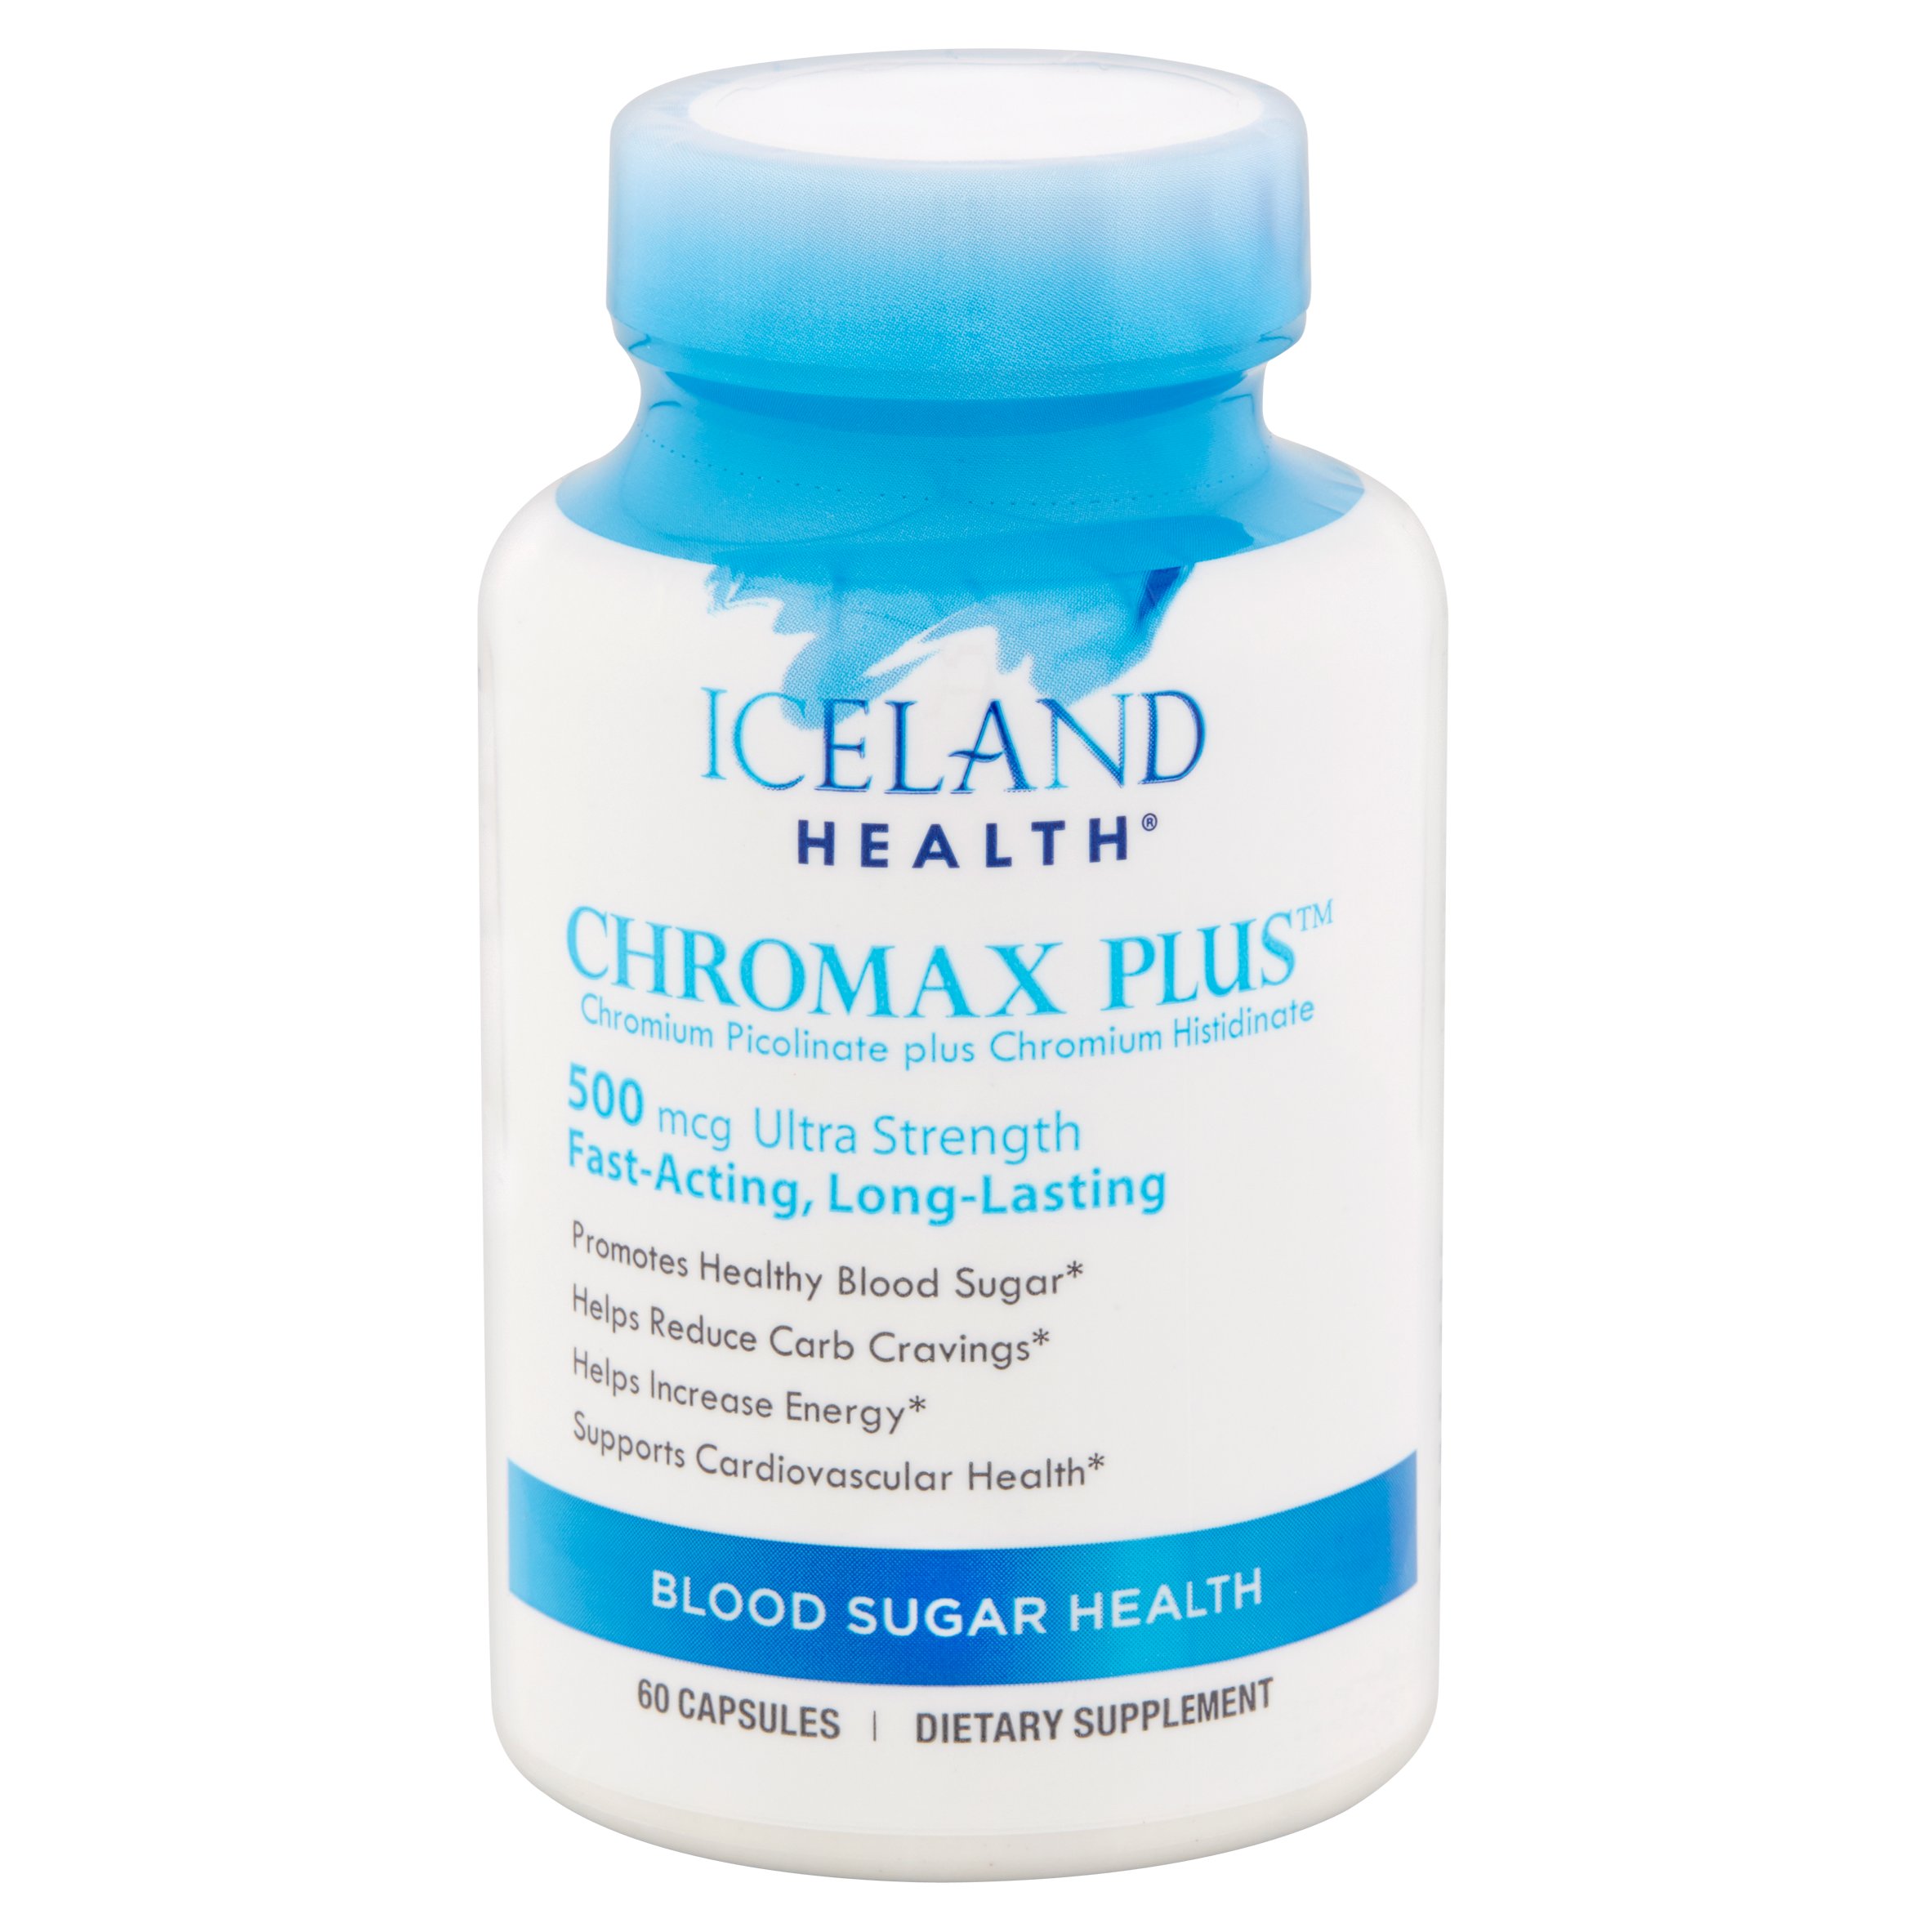 Iceland Health Chromax Plus Blood Sugar Health Capsules, 60 count - image 2 of 6